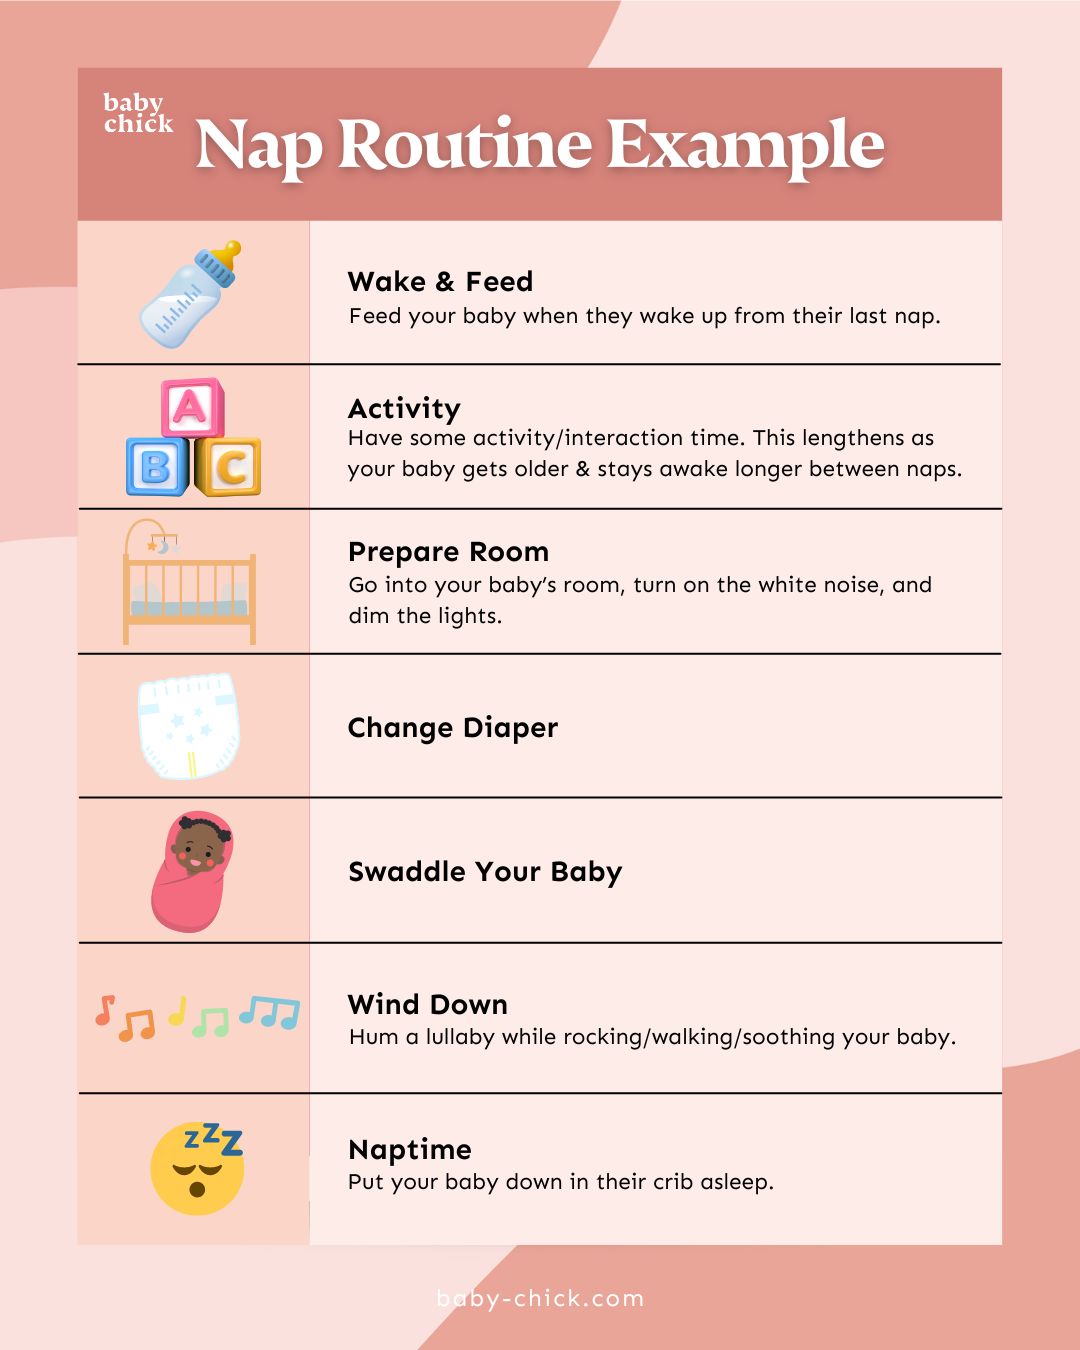 Nap routine example